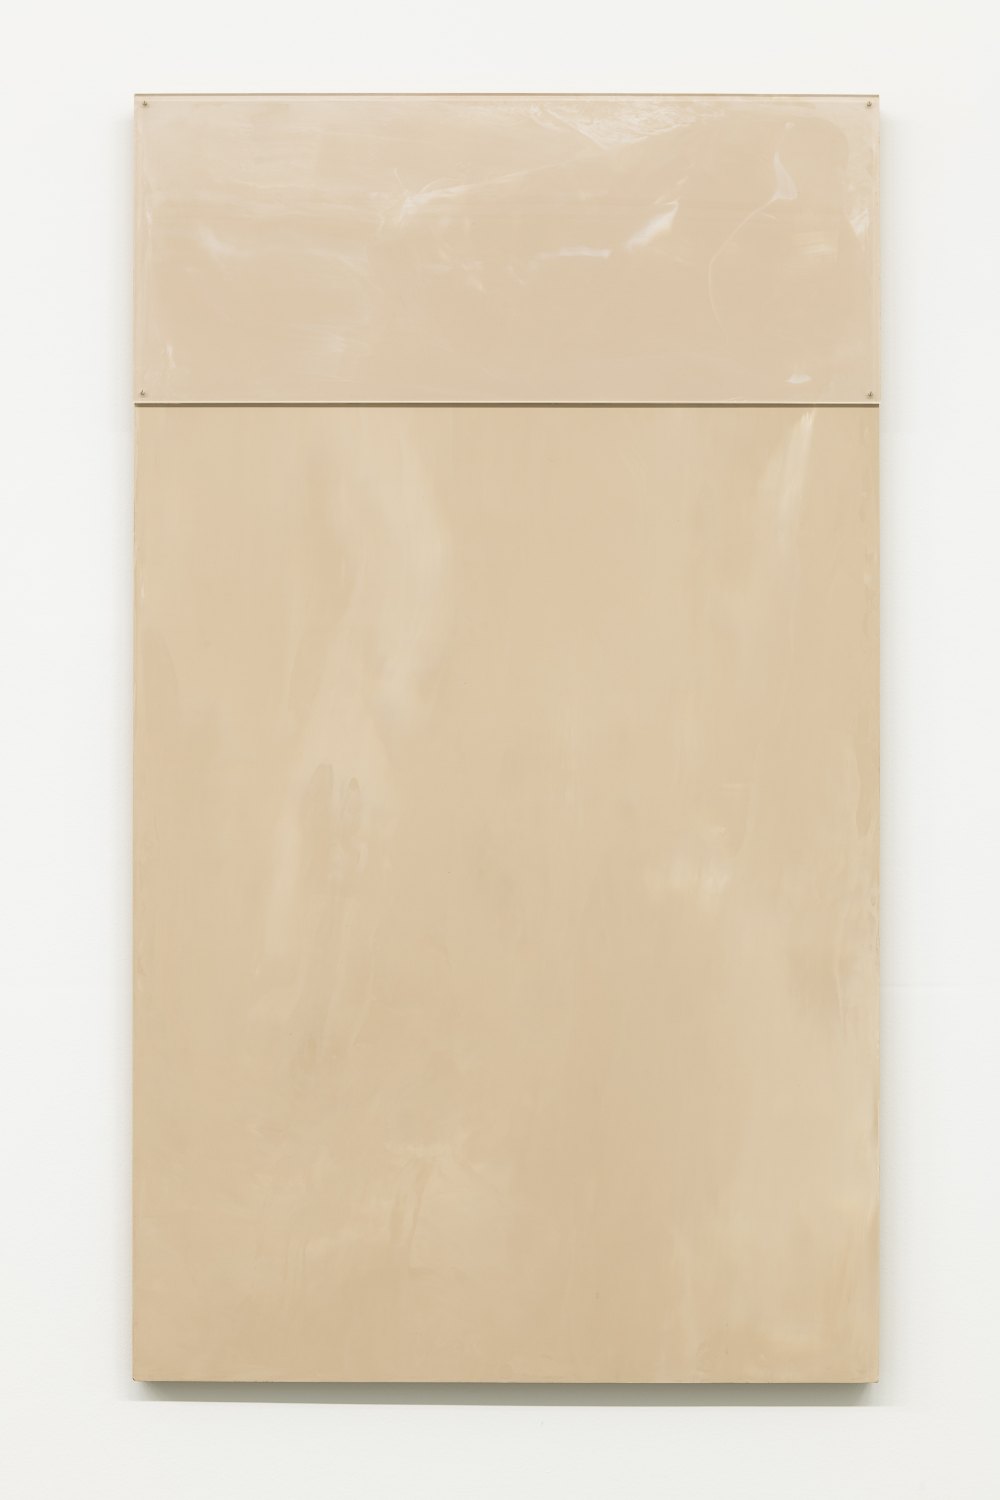 Ull Hohn, Untitled, 1989 Enamel and plasater on canvas, plexiglass, 210 x 122 x 5 cm